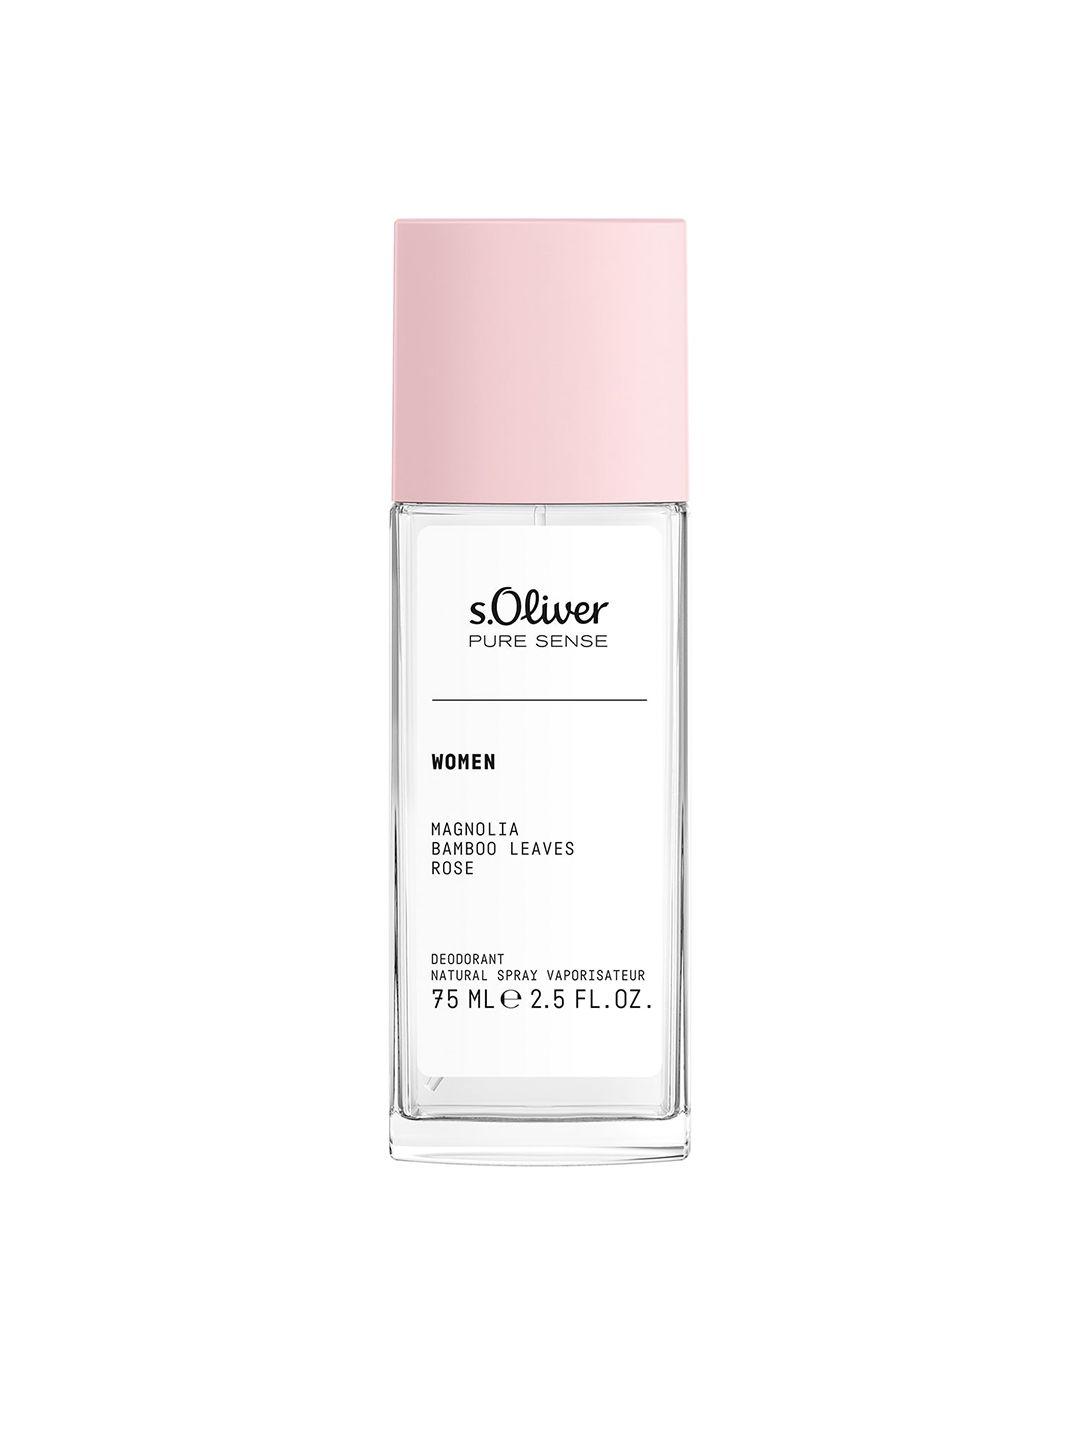 s.oliver pure sense deodorant natural spray - 75 ml